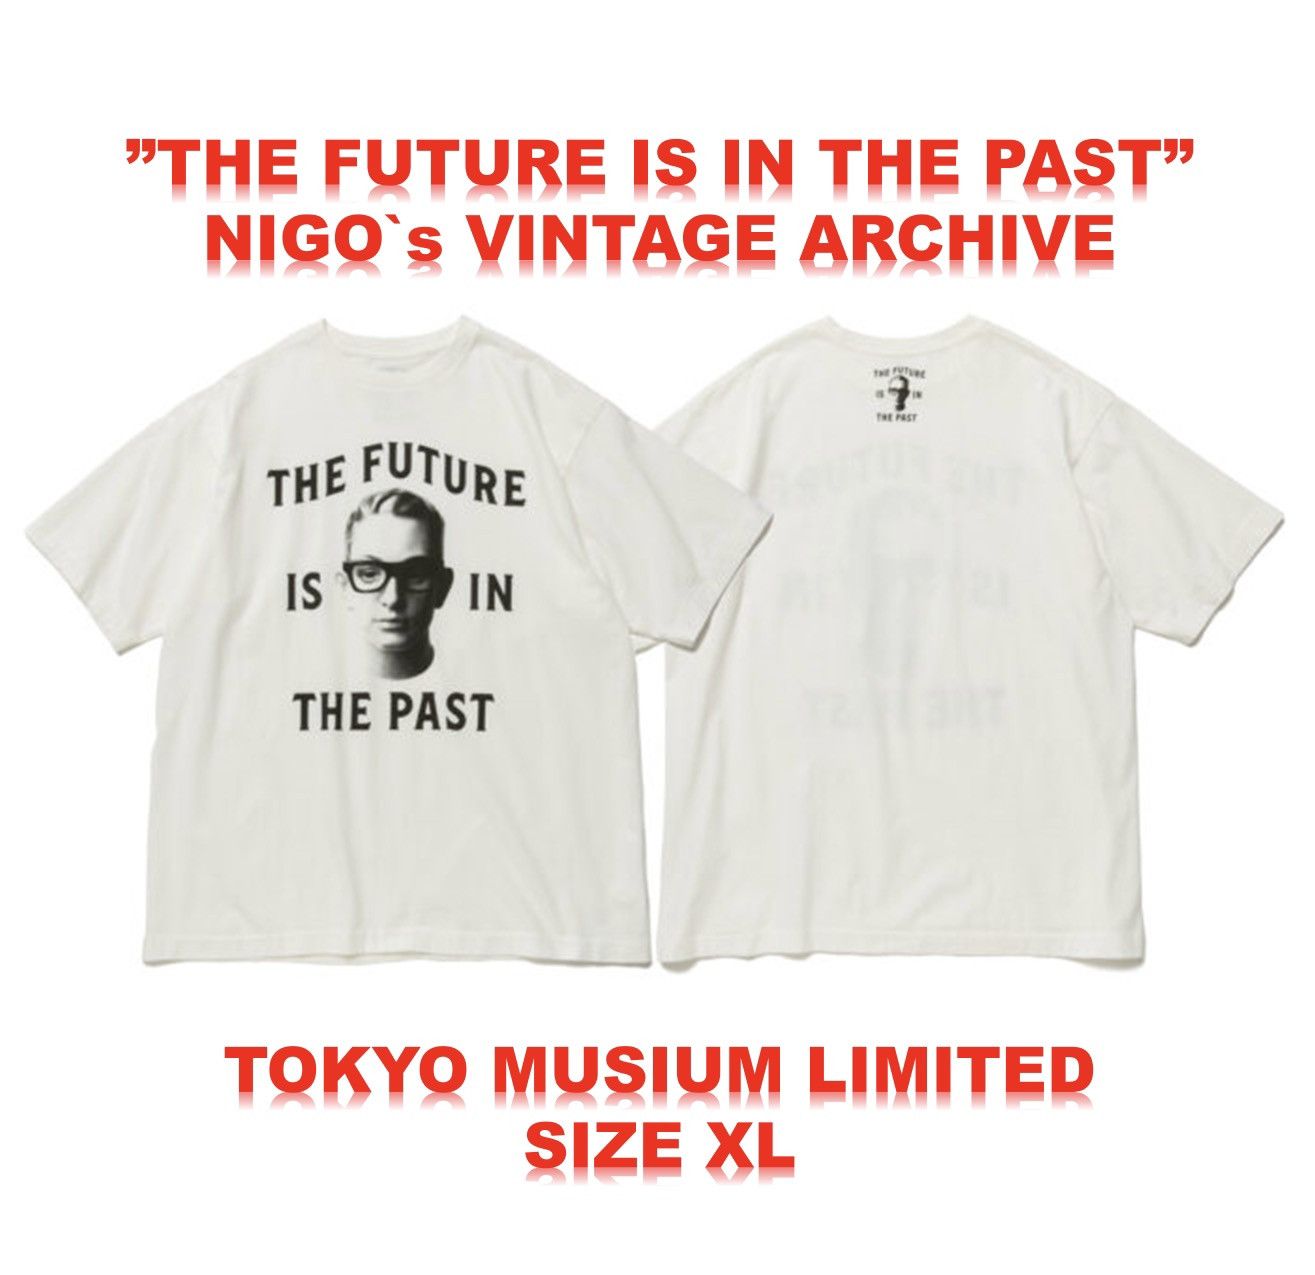 Inside NIGO®'S Archive